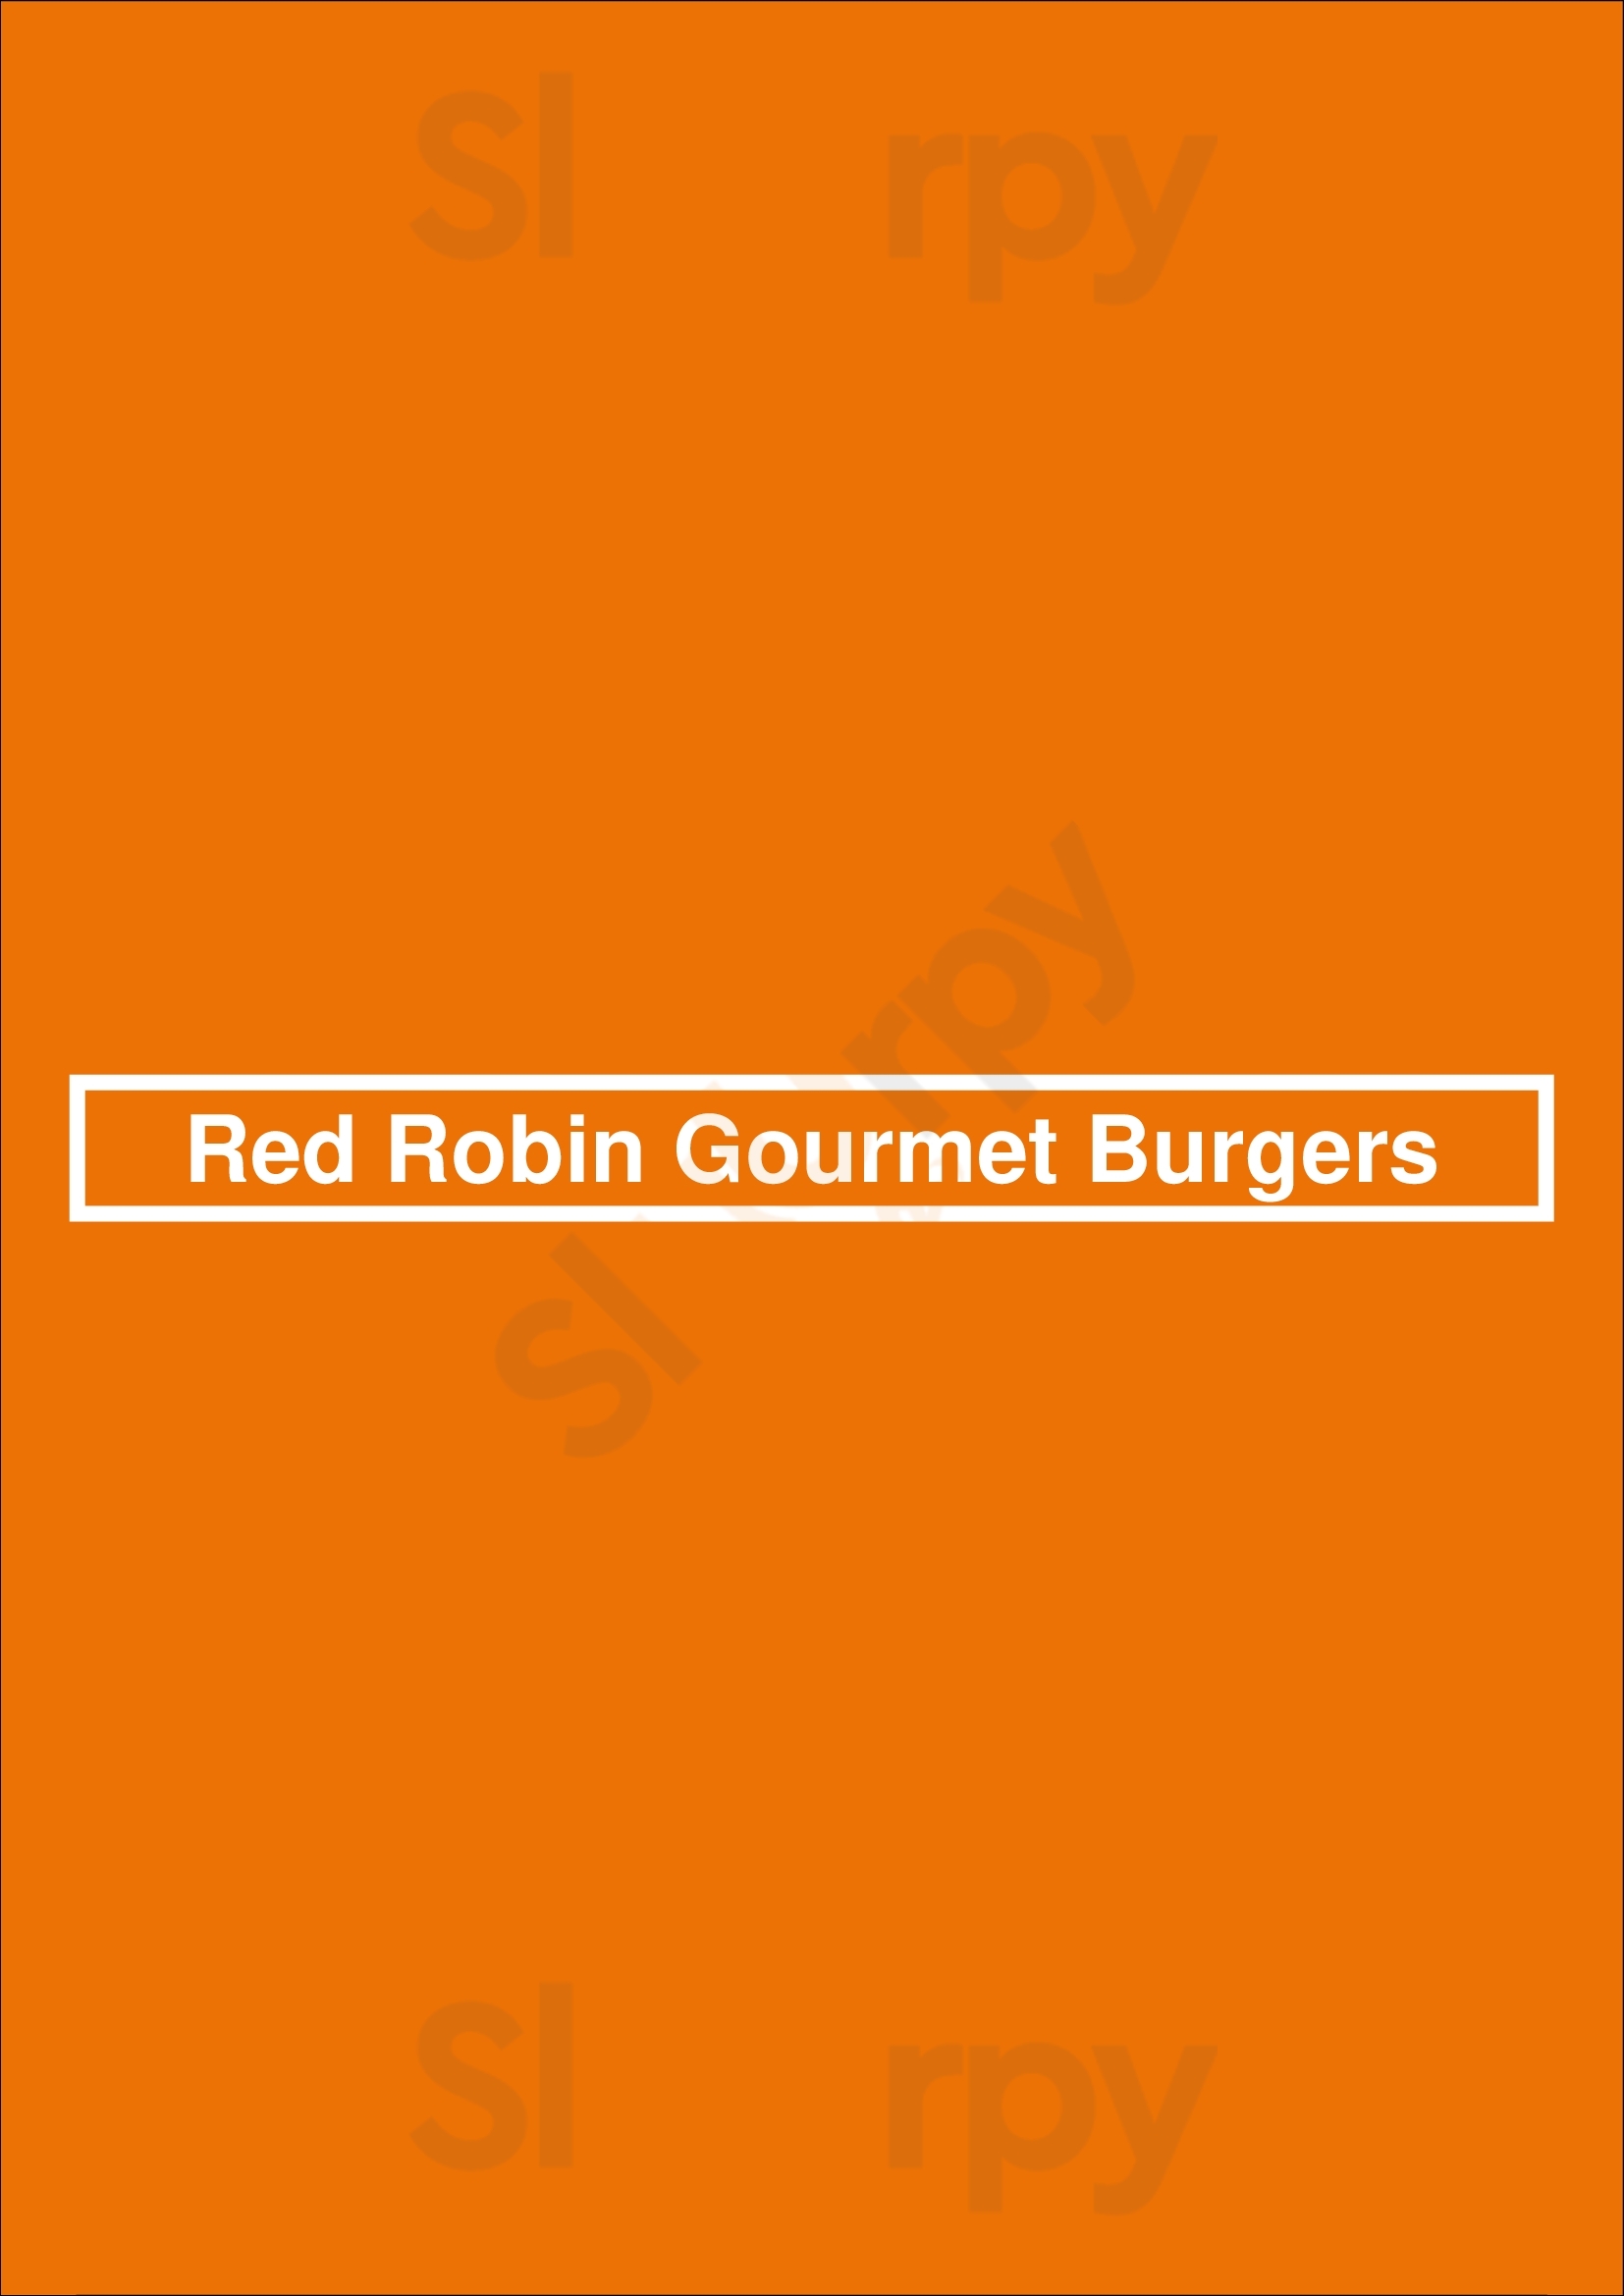 Red Robin Gourmet Burgers Charlotte Menu - 1